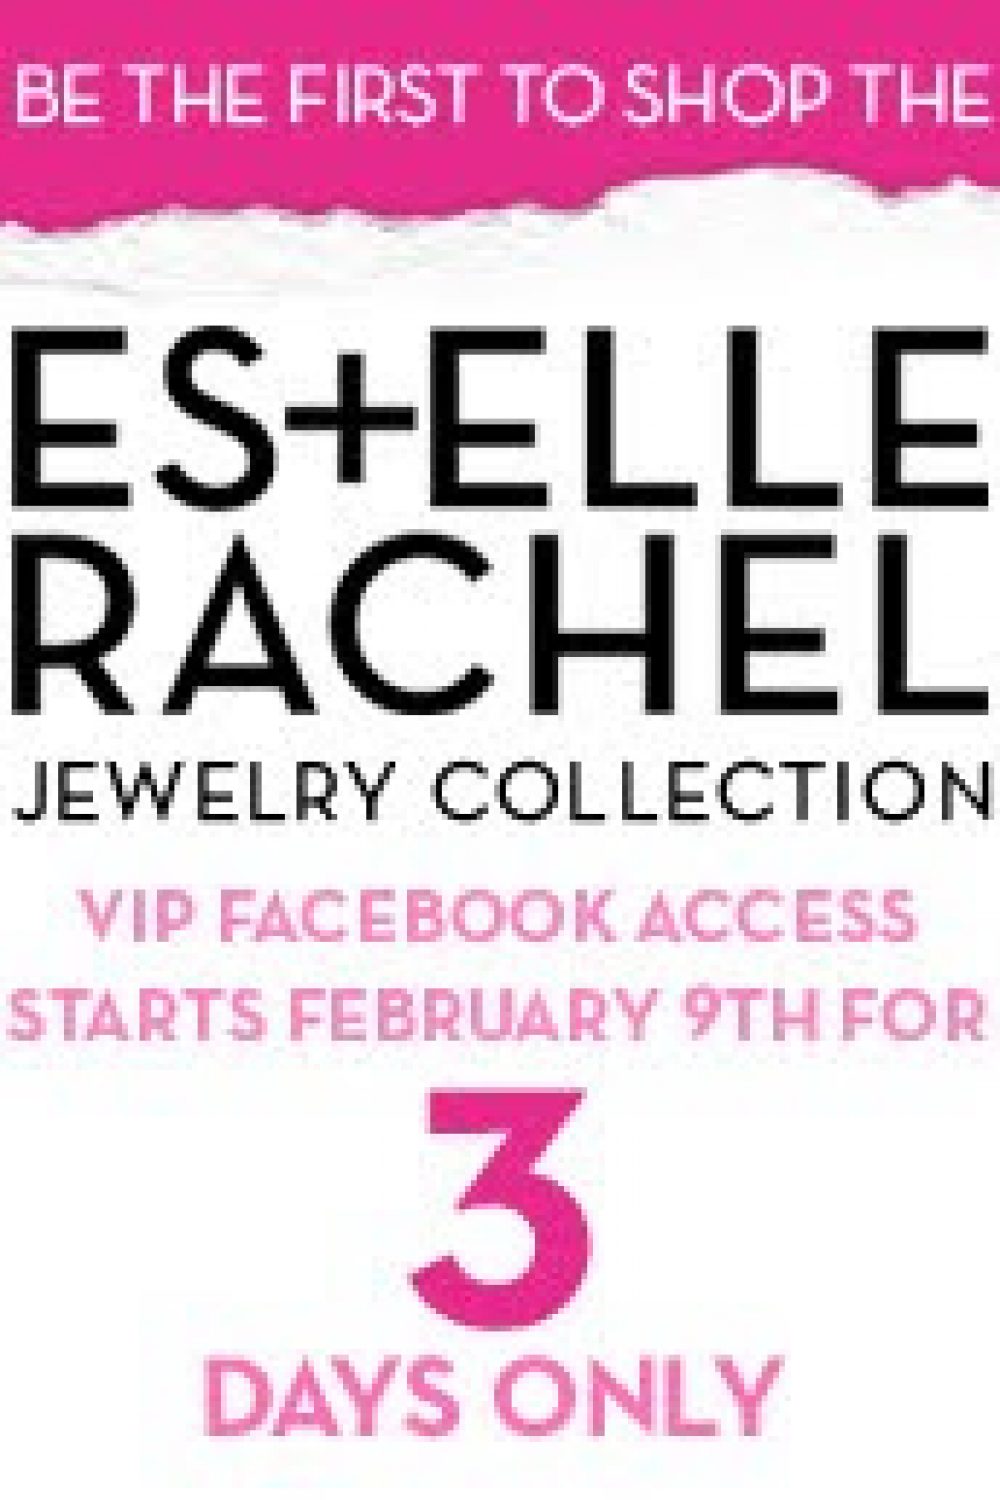 Rachel Roy & Estelle Pop-Up Facebook Jewelry Shop